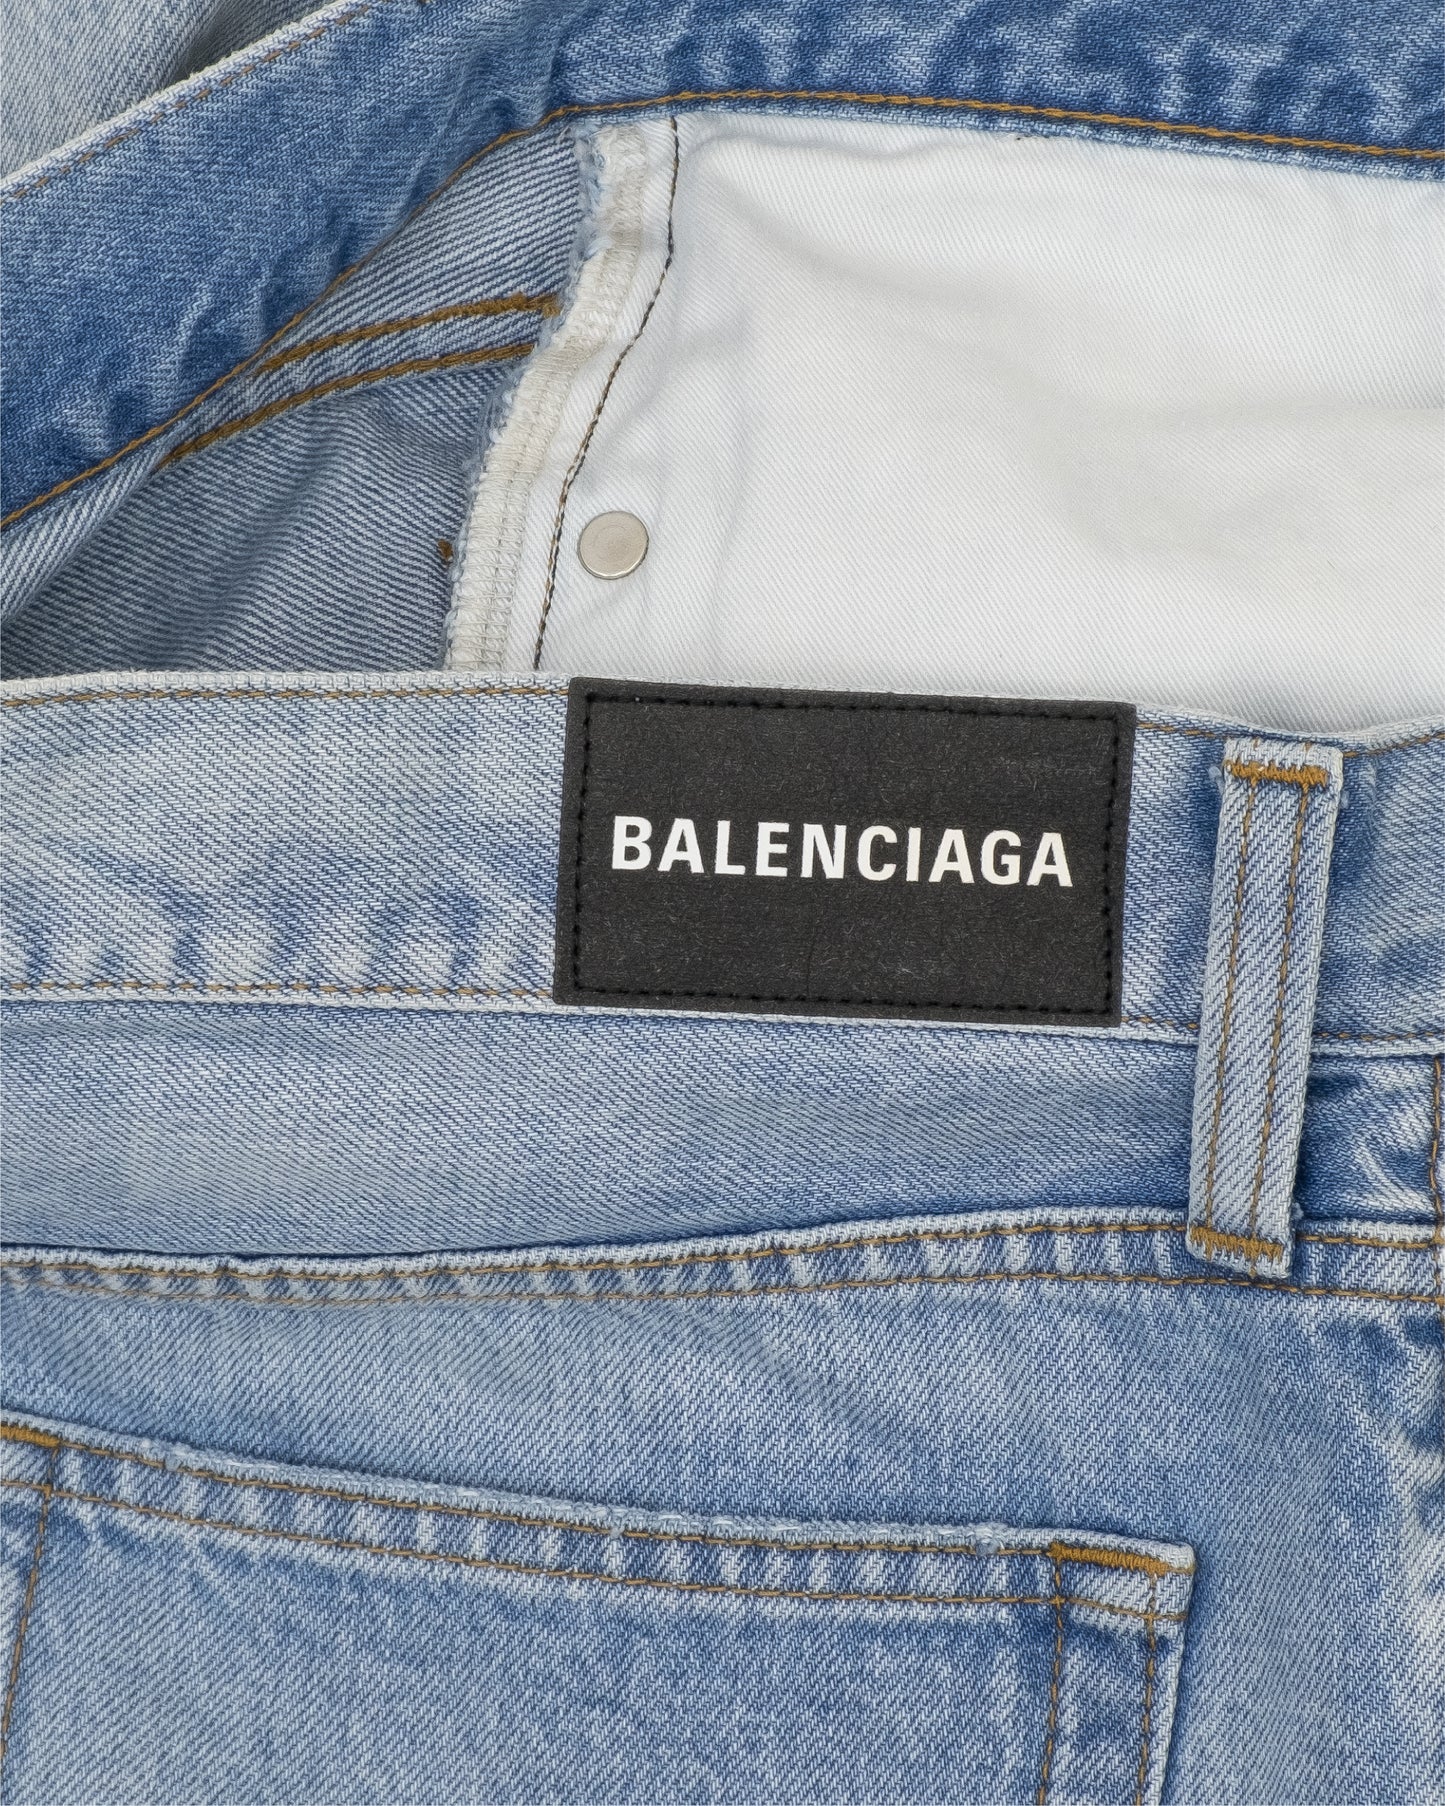 Balenciaga AW18 Denim Shorts